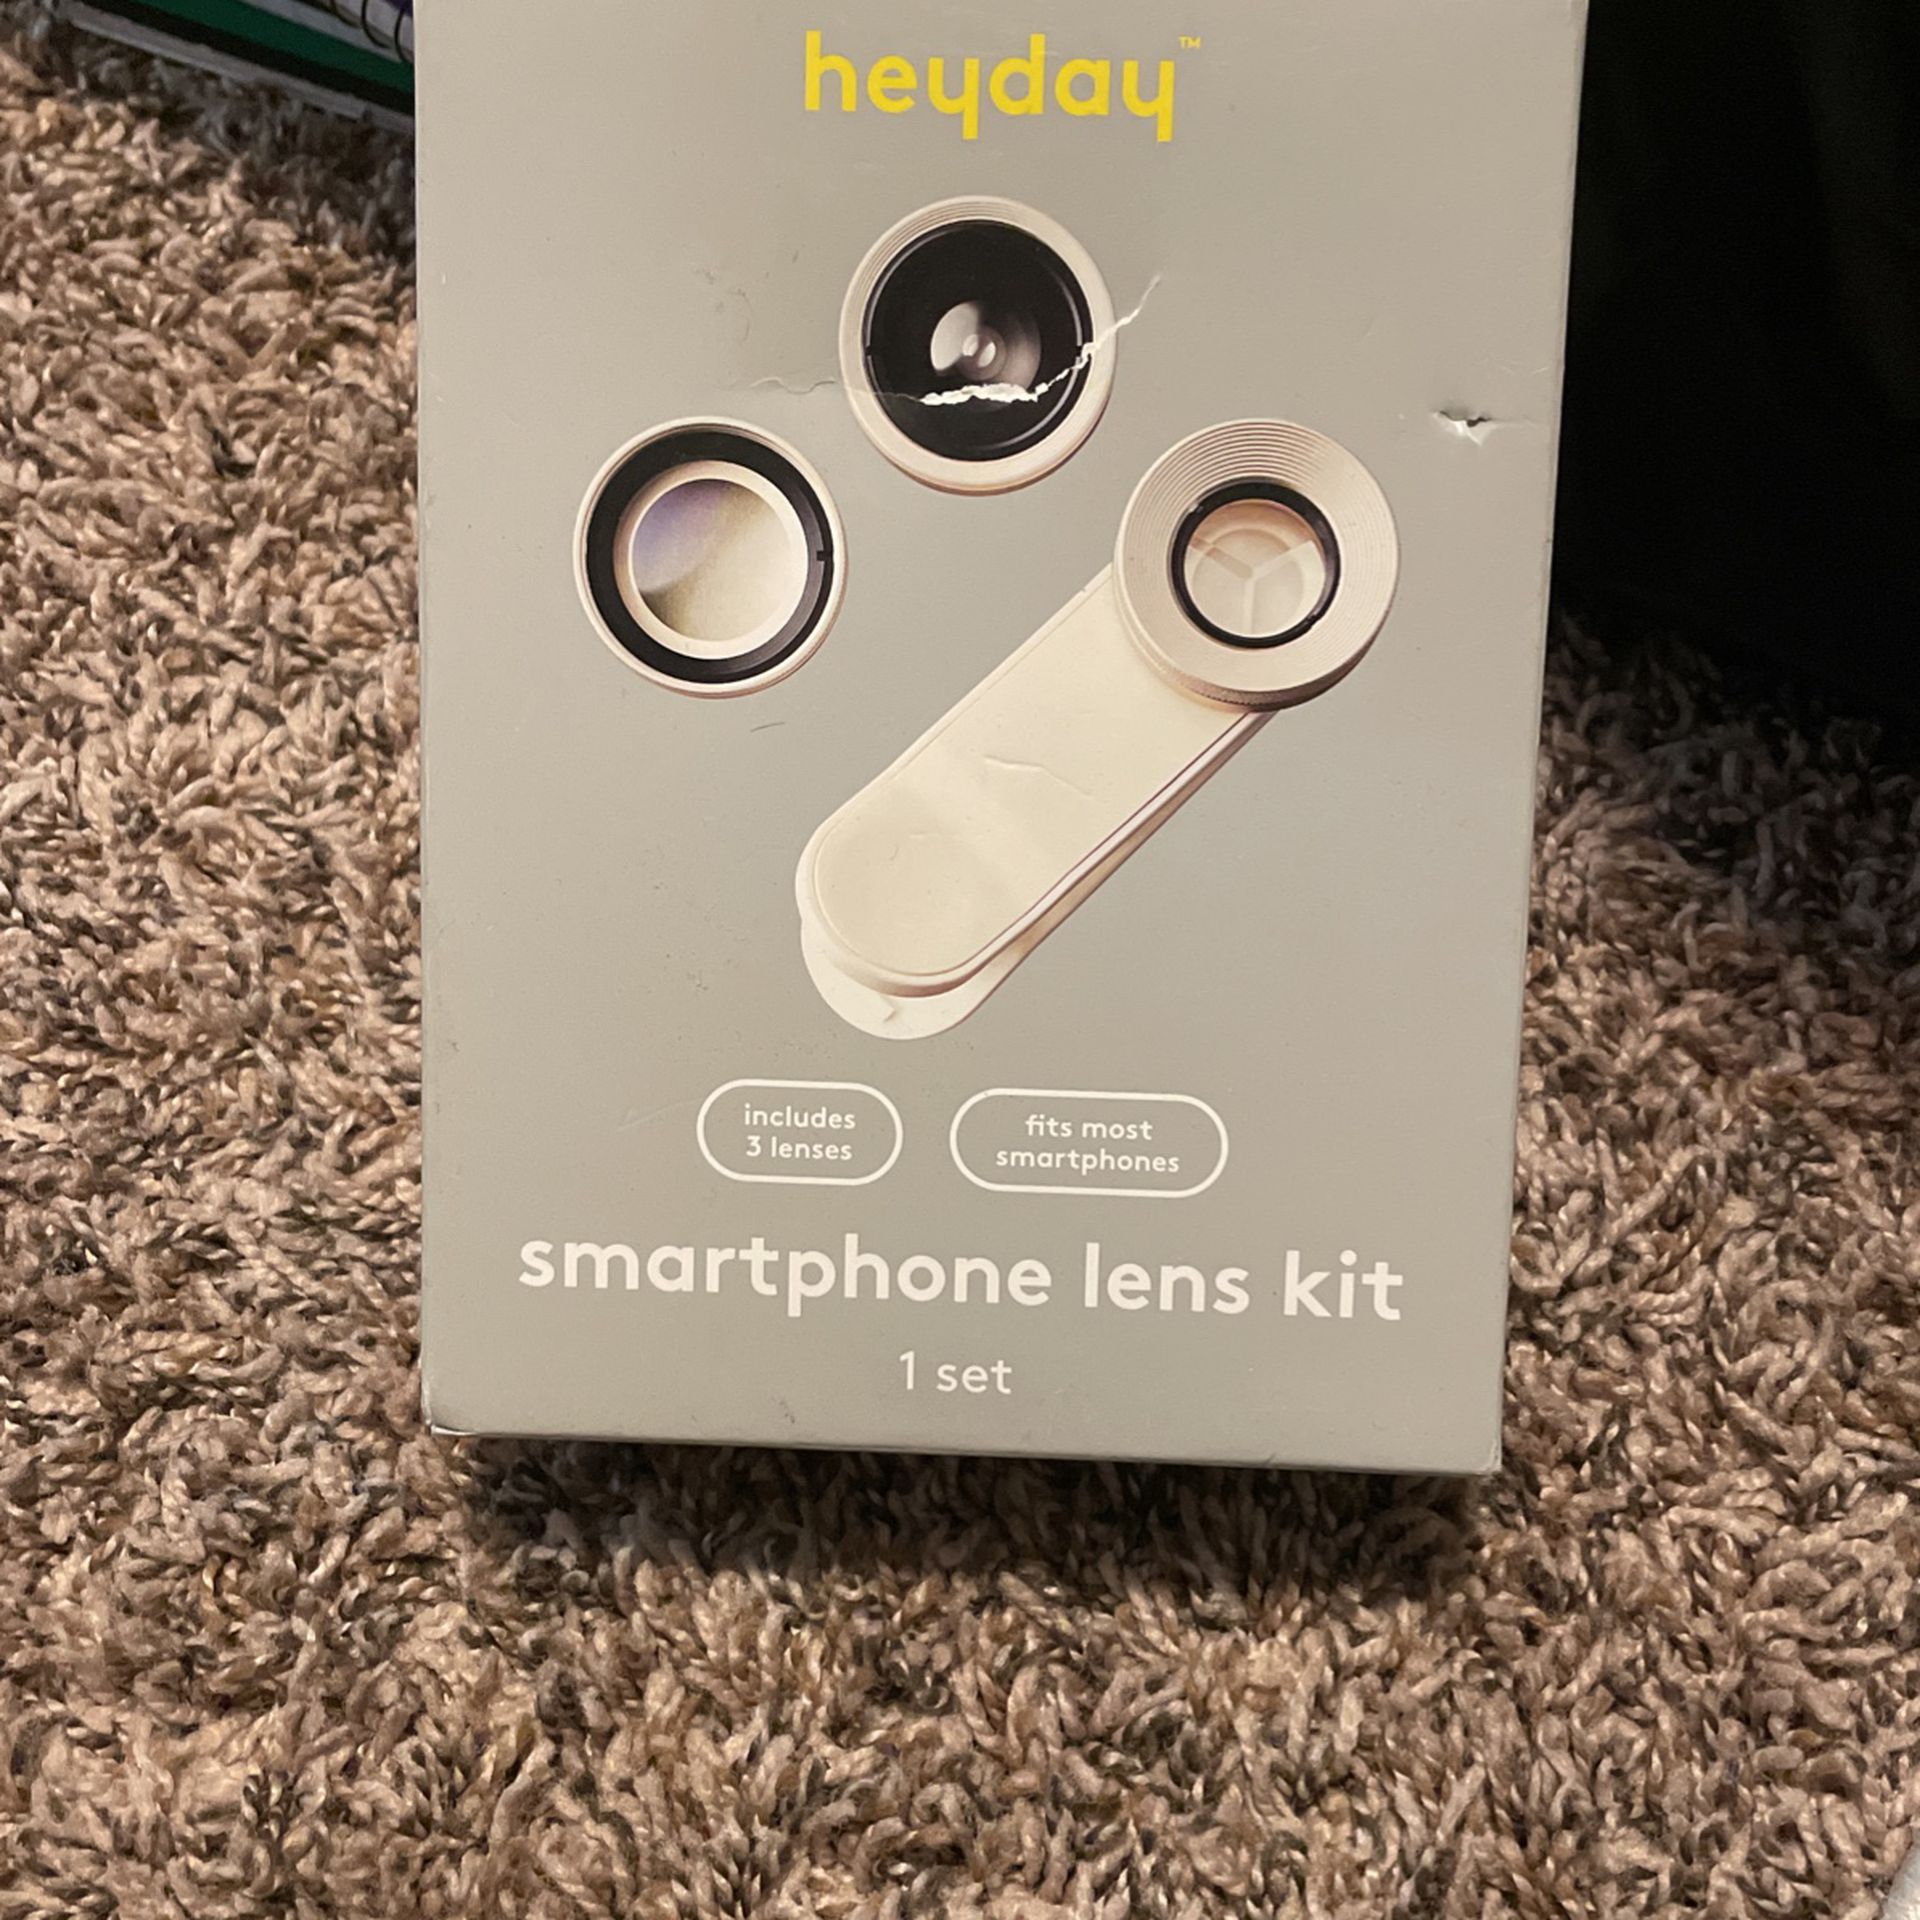 SmartPhone Lens Kit  Hey day 